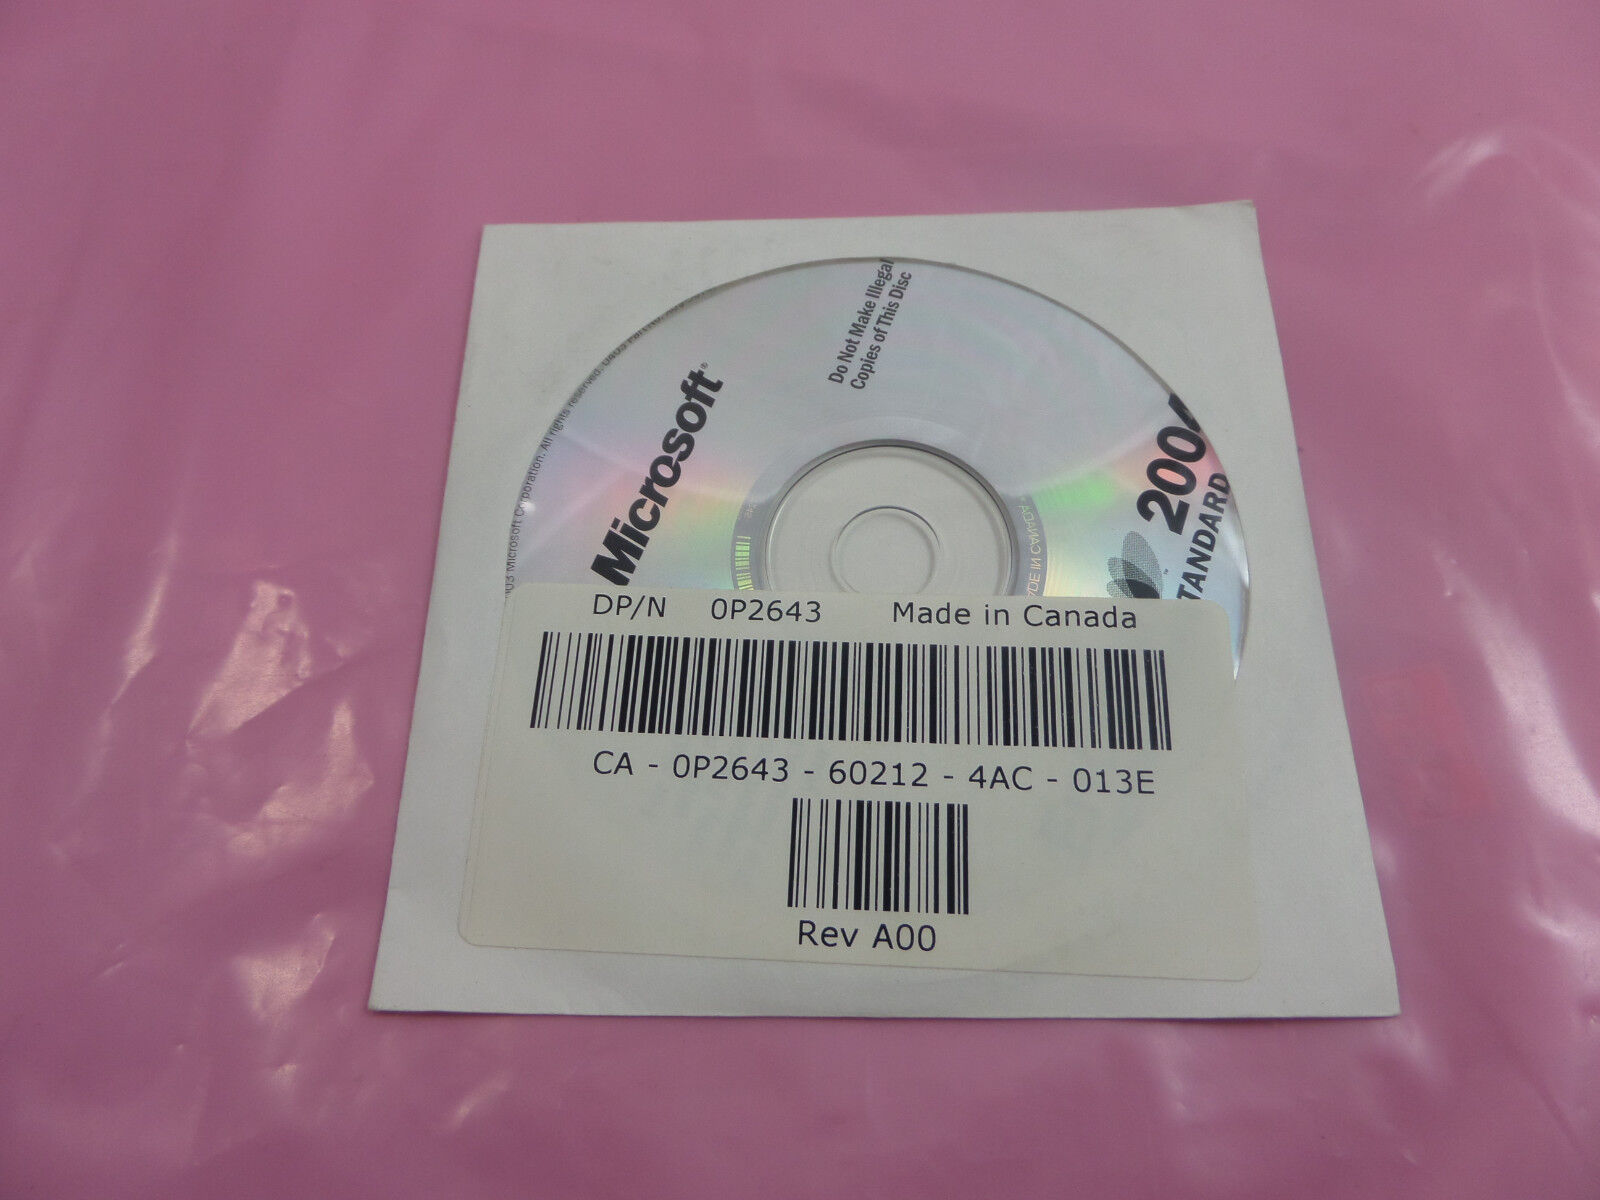 MICROSOFT ENCARTA 2004 ENCYCLOPEDIA STANDARD CD-ROM TRACKING ID SEALED P2643 NEW